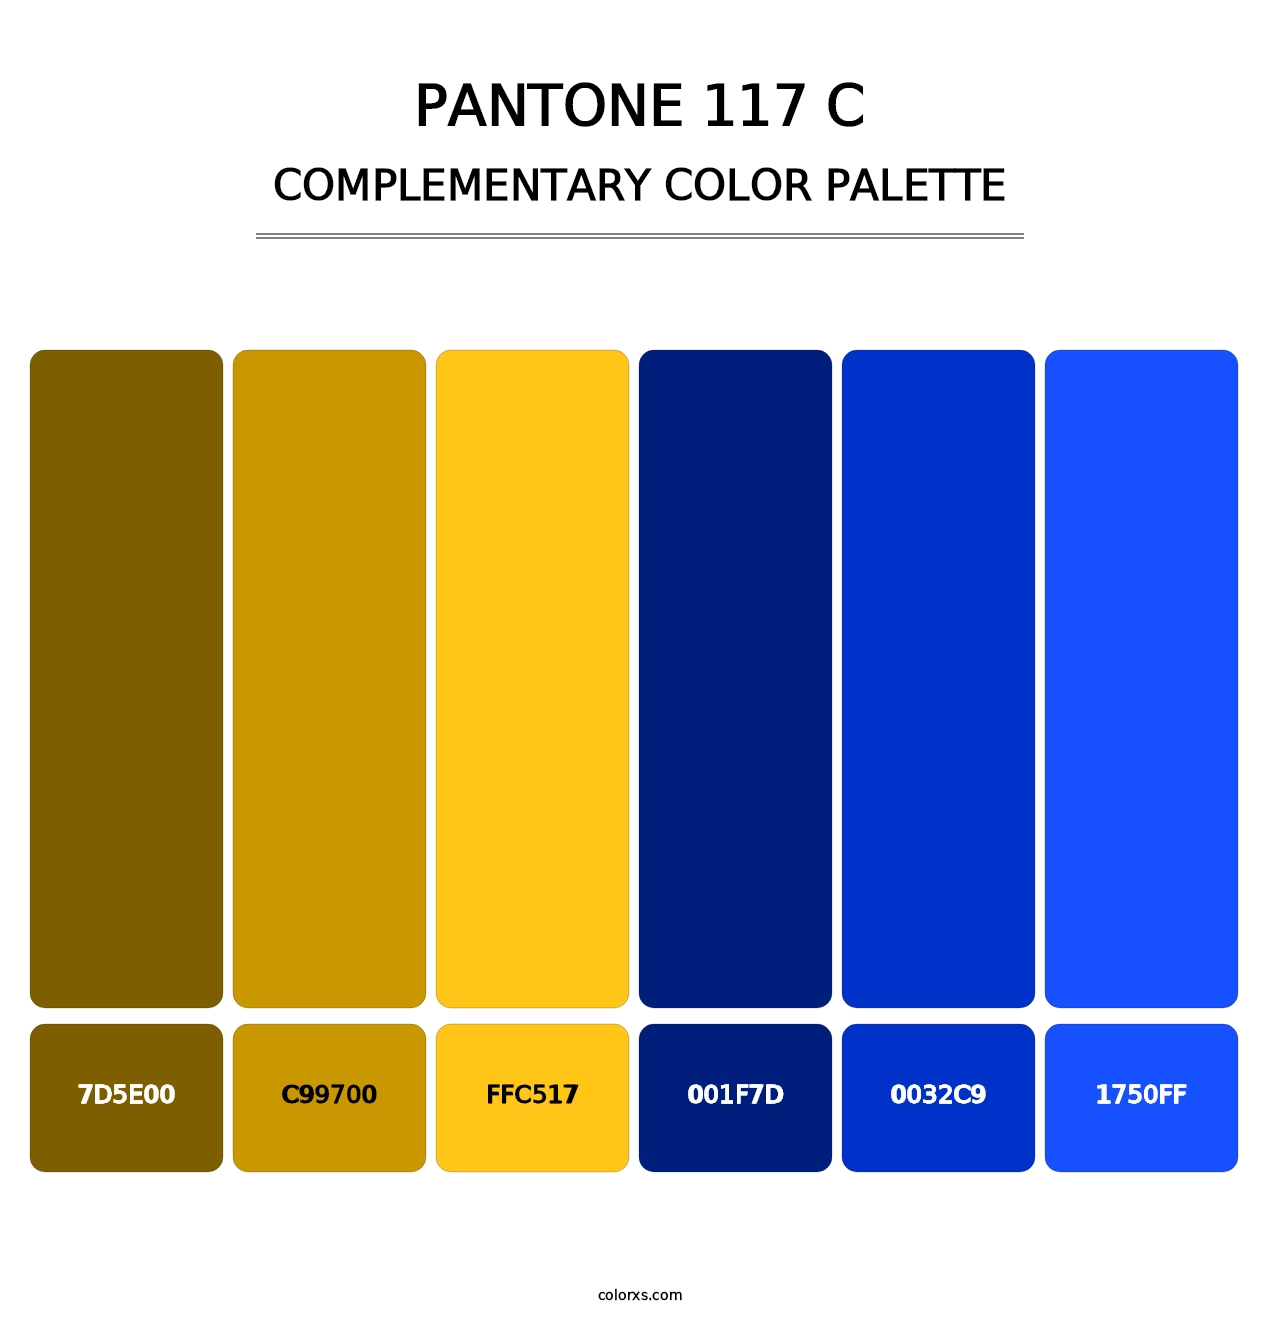 PANTONE 117 C - Complementary Color Palette